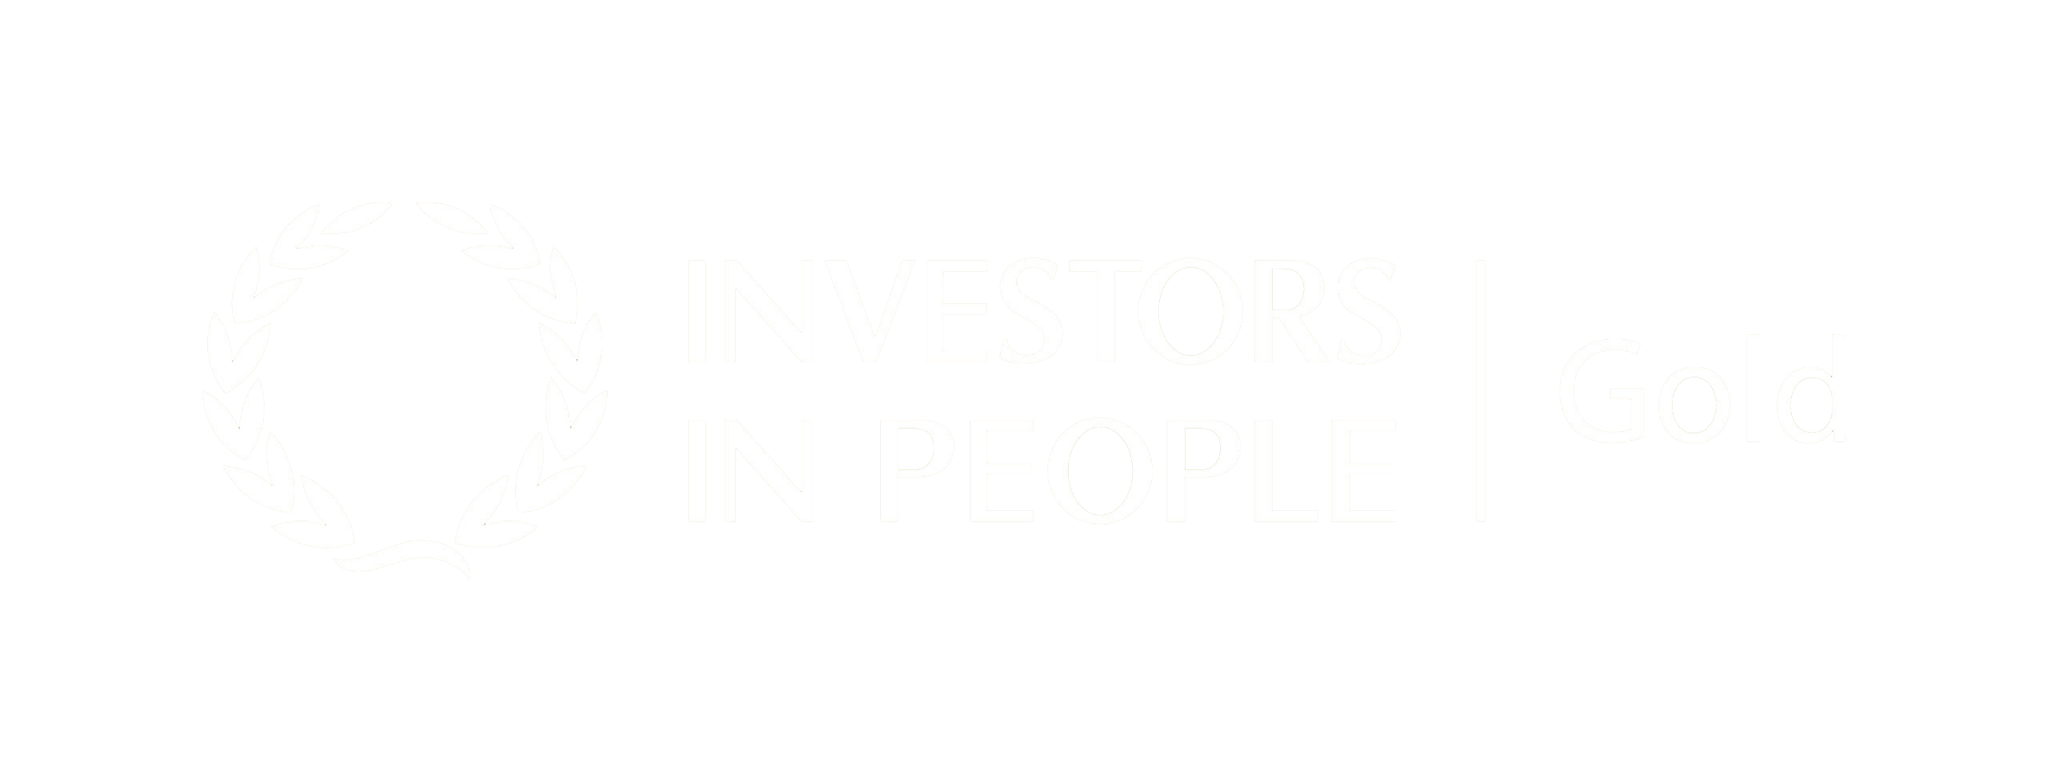 investors-people-gold